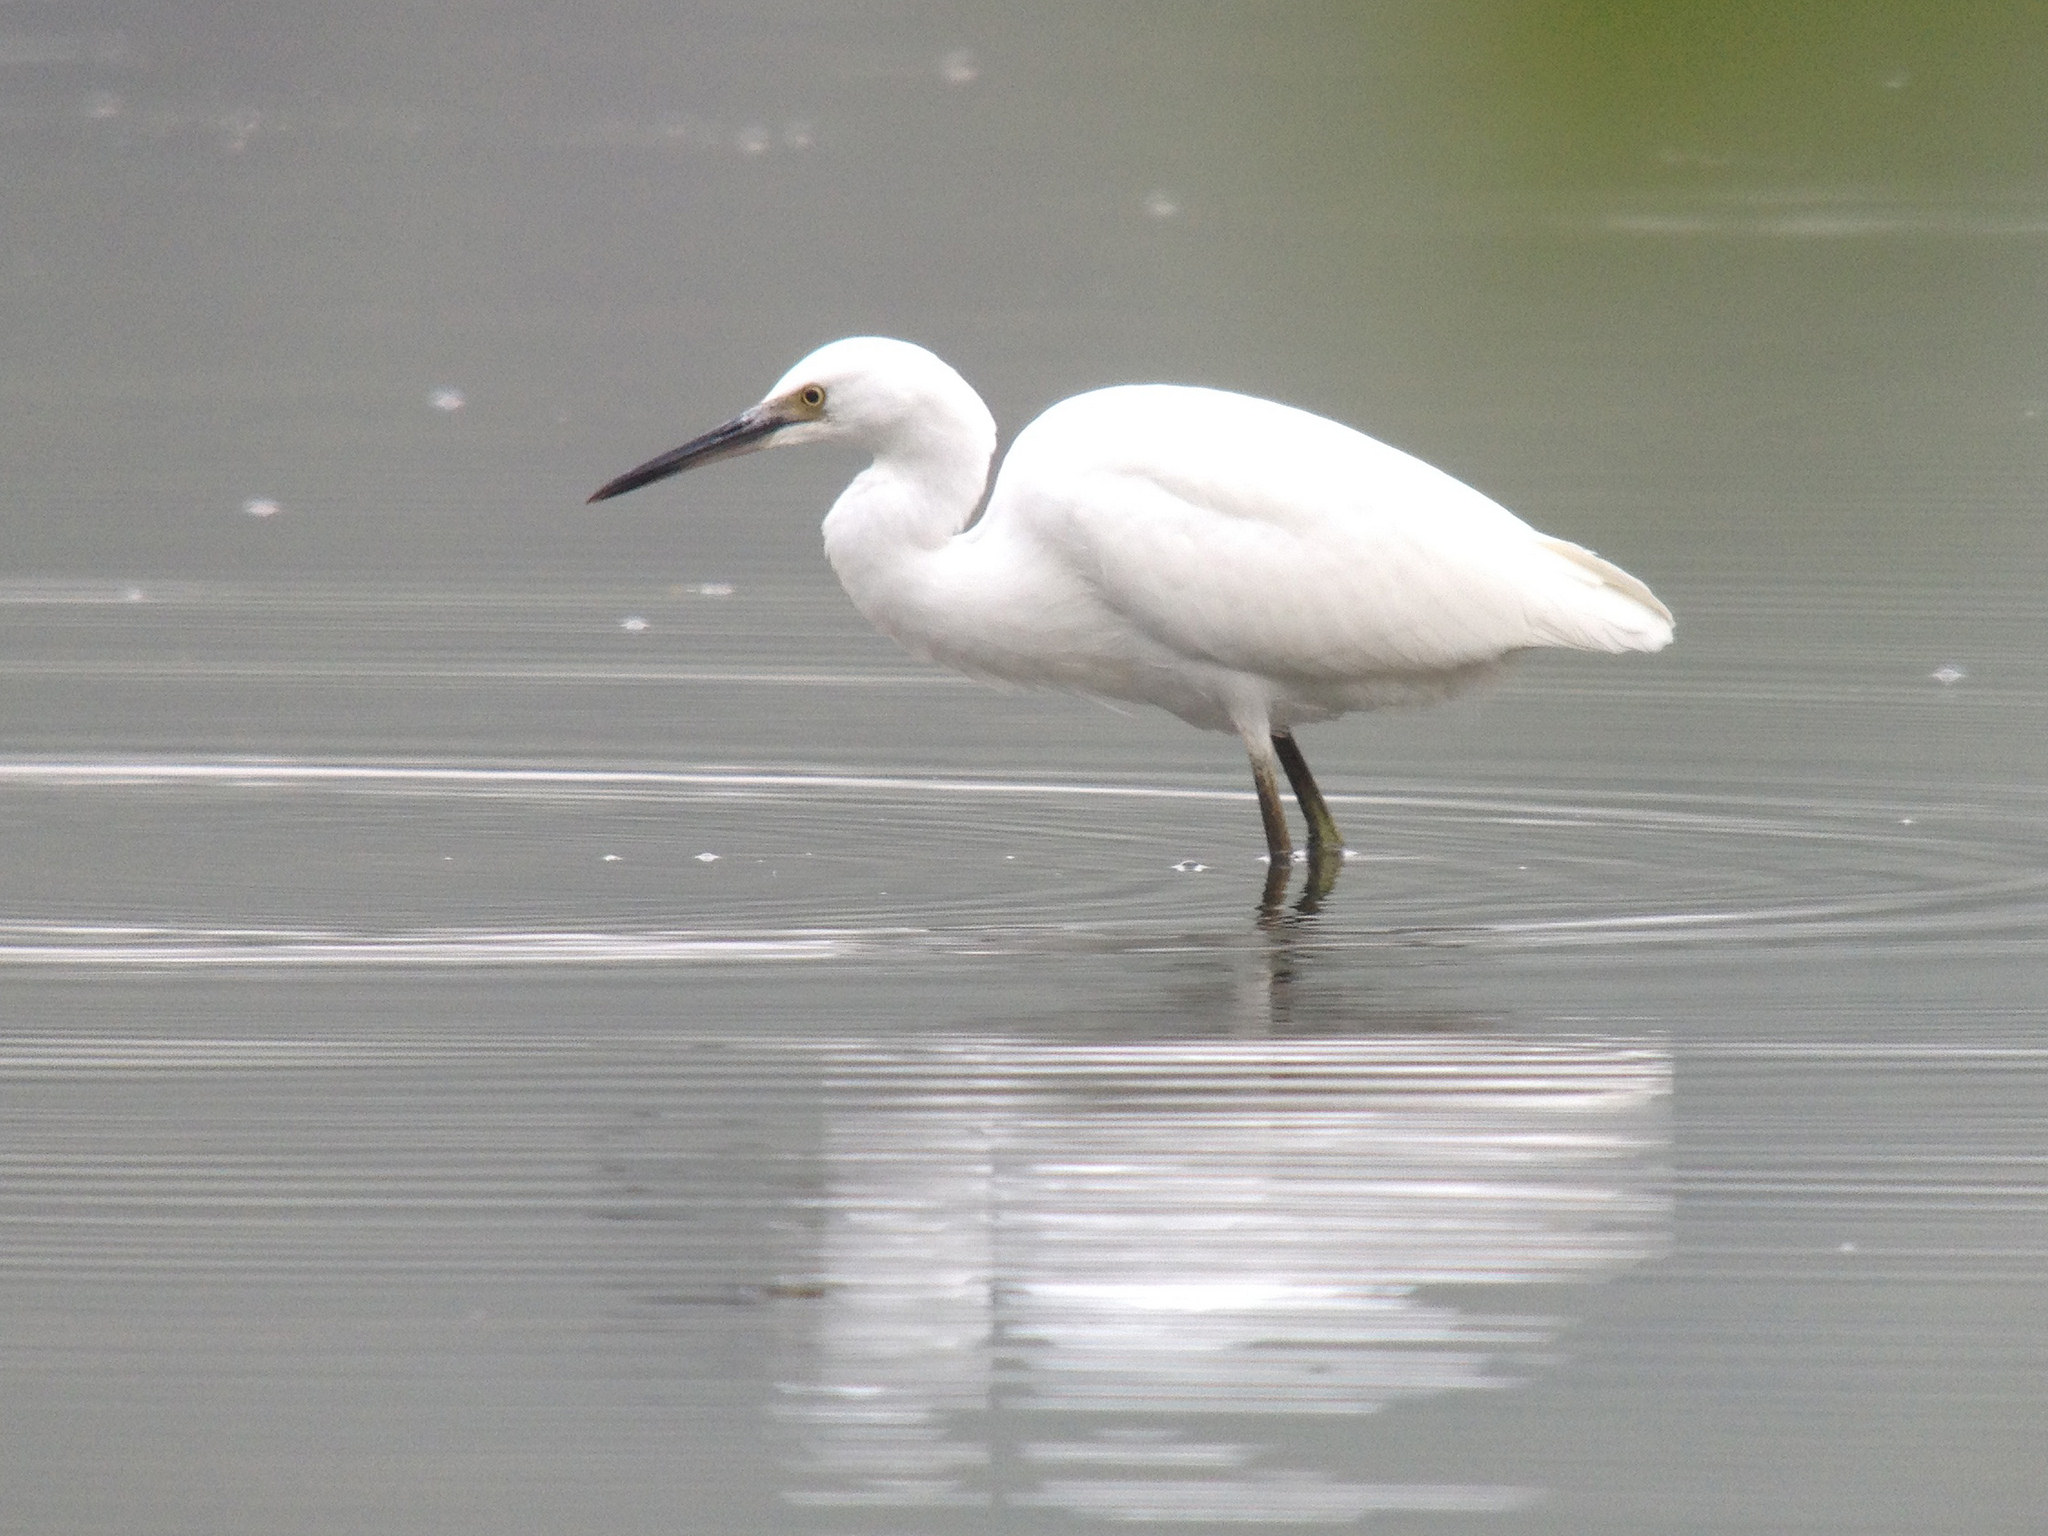 Quabbin birding and beyond: Snowy Egret along the river